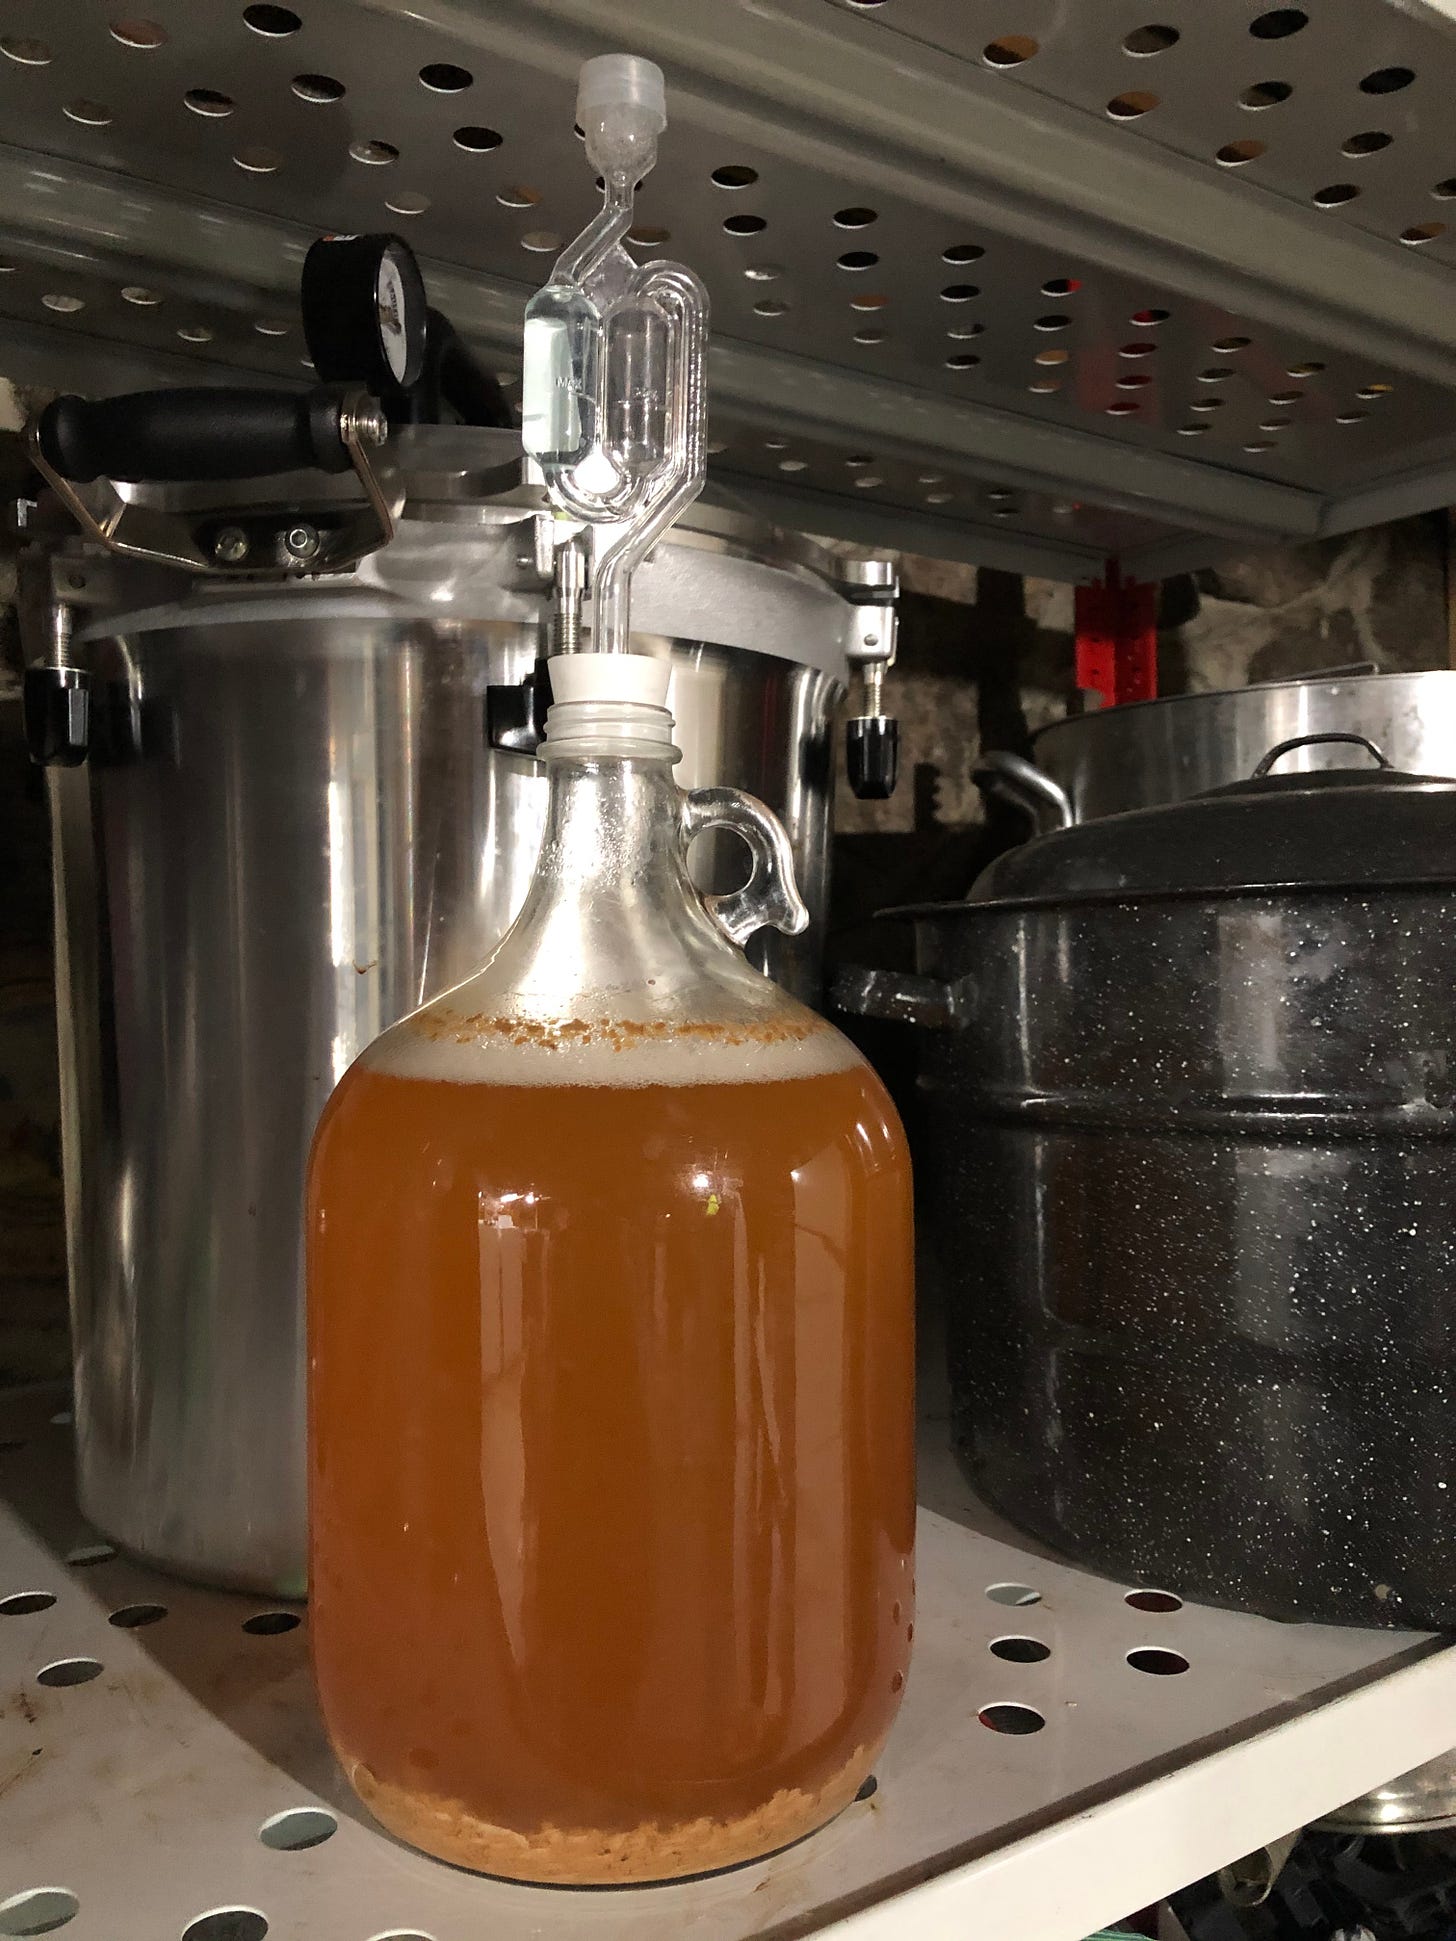 gallon jug of cider fermenting